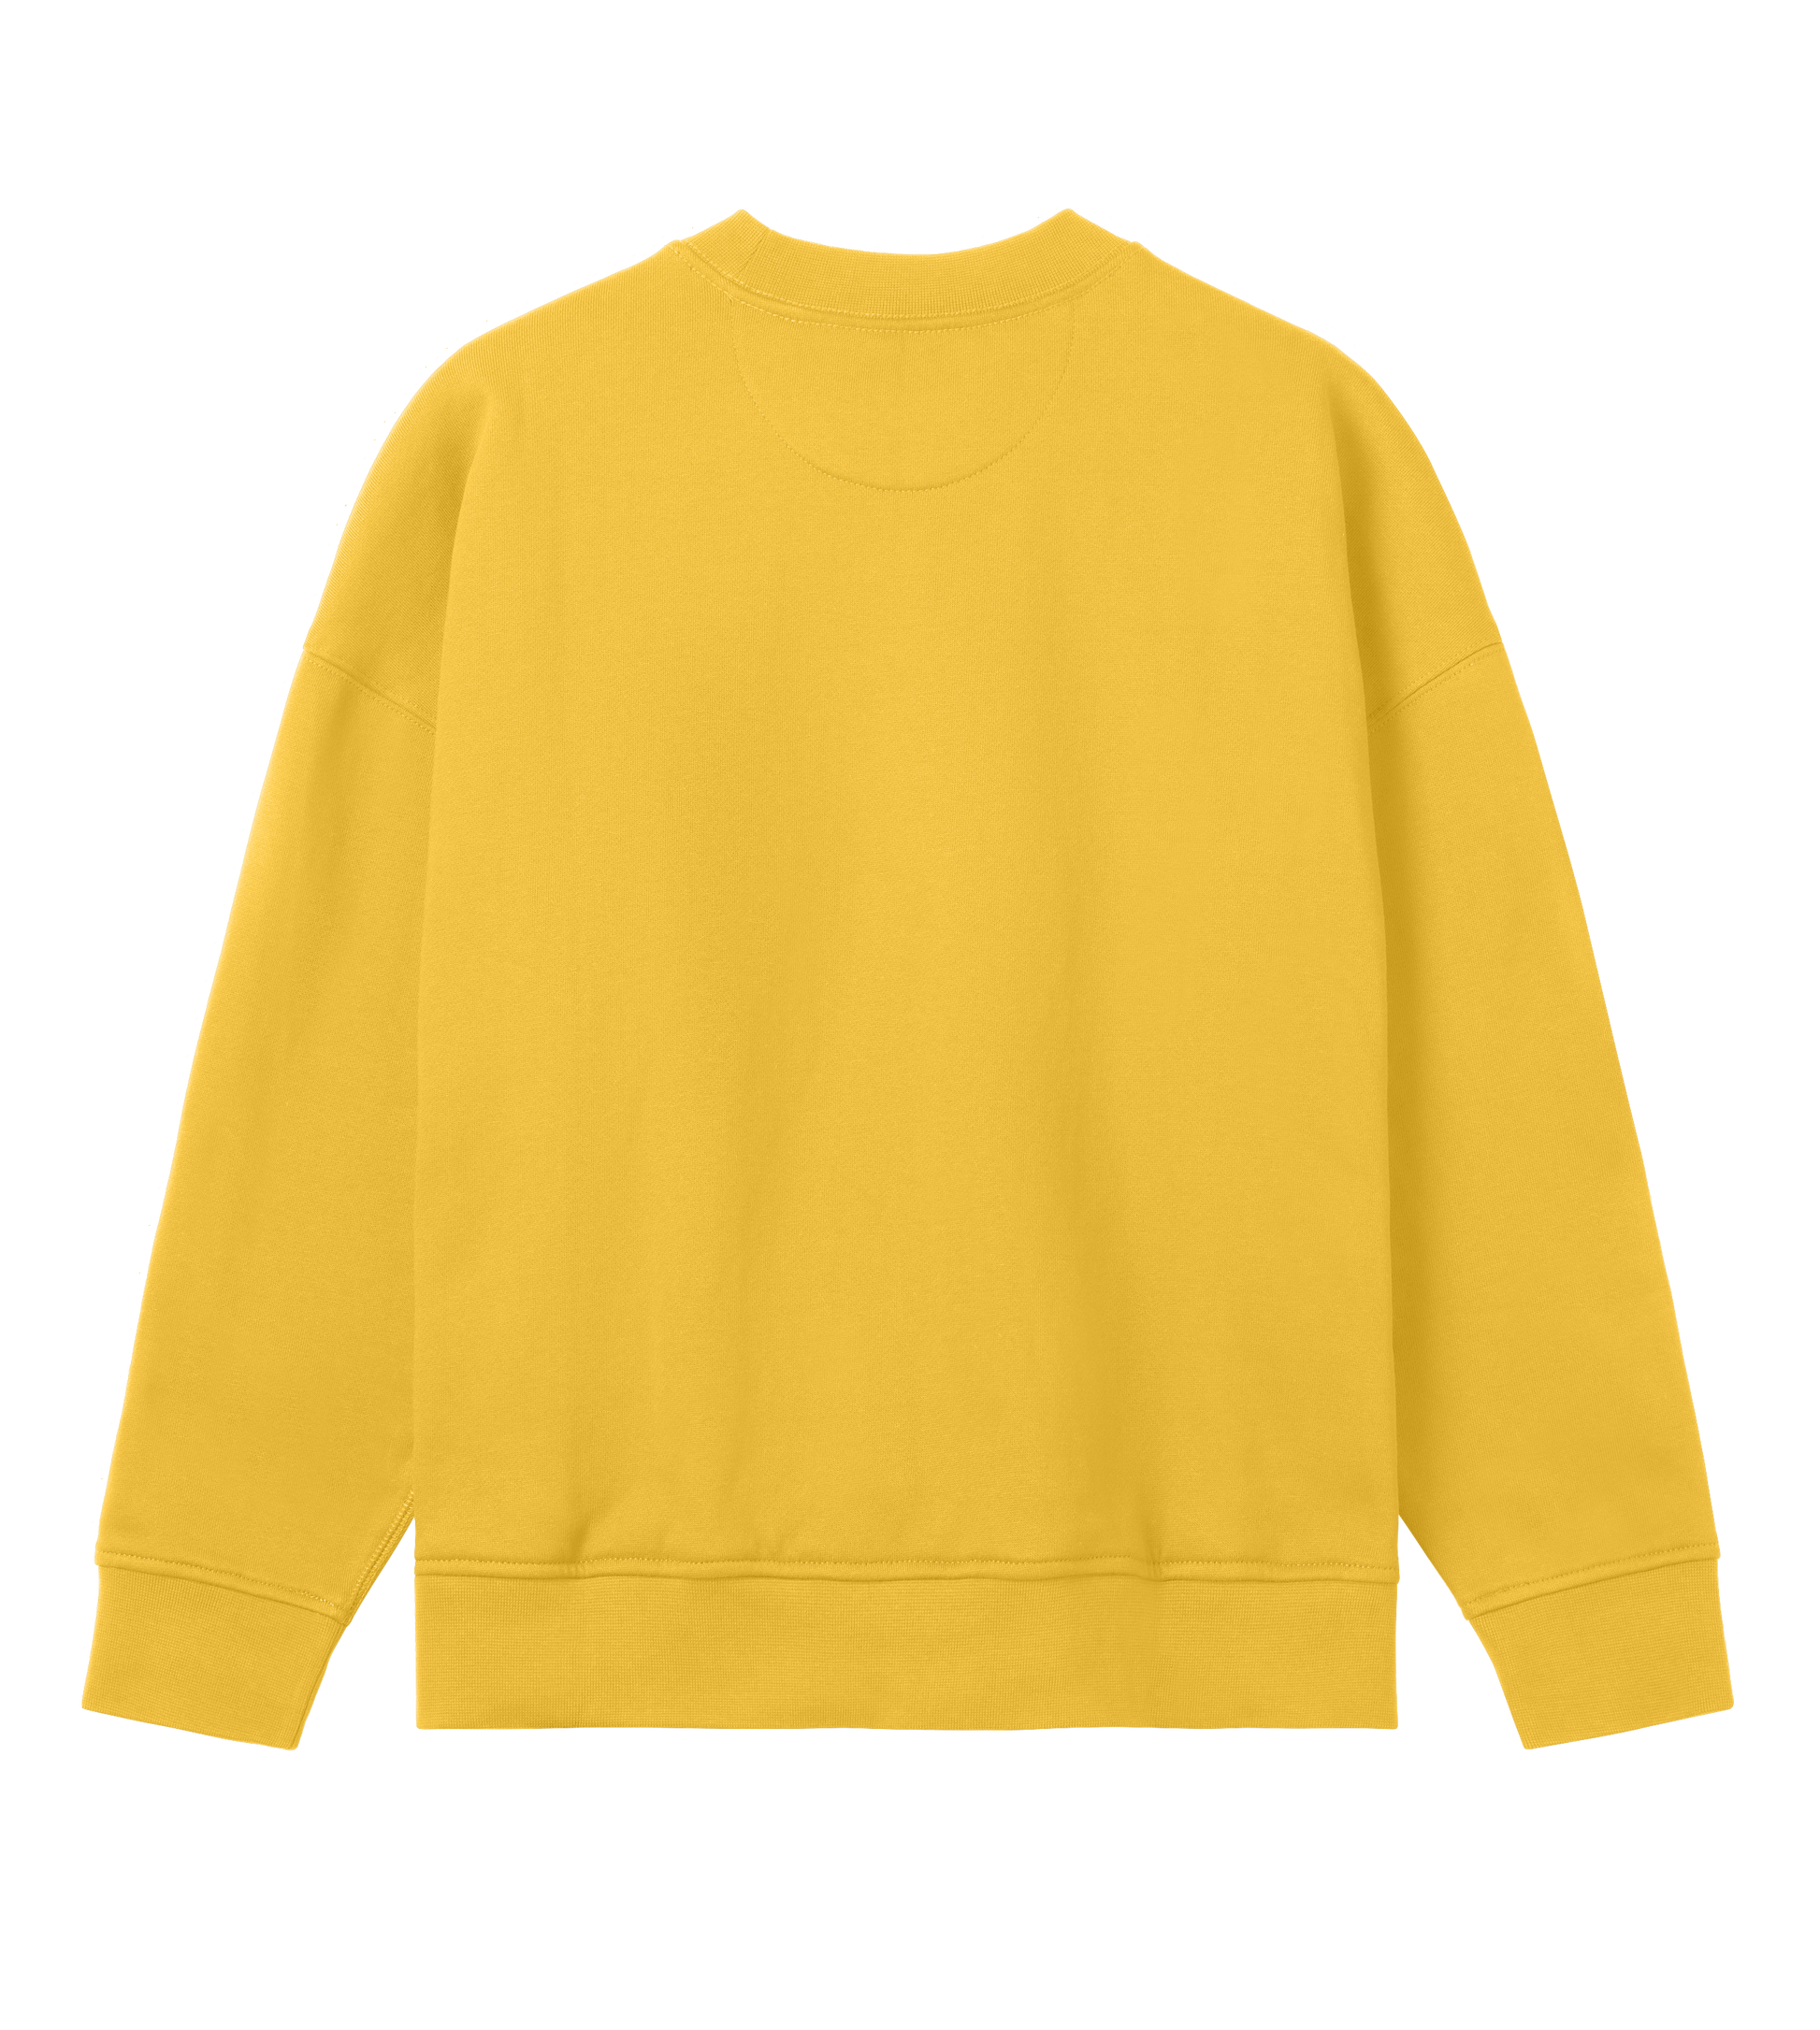 Women's Boxy Sweatshirt with Golden Triangle Symbol